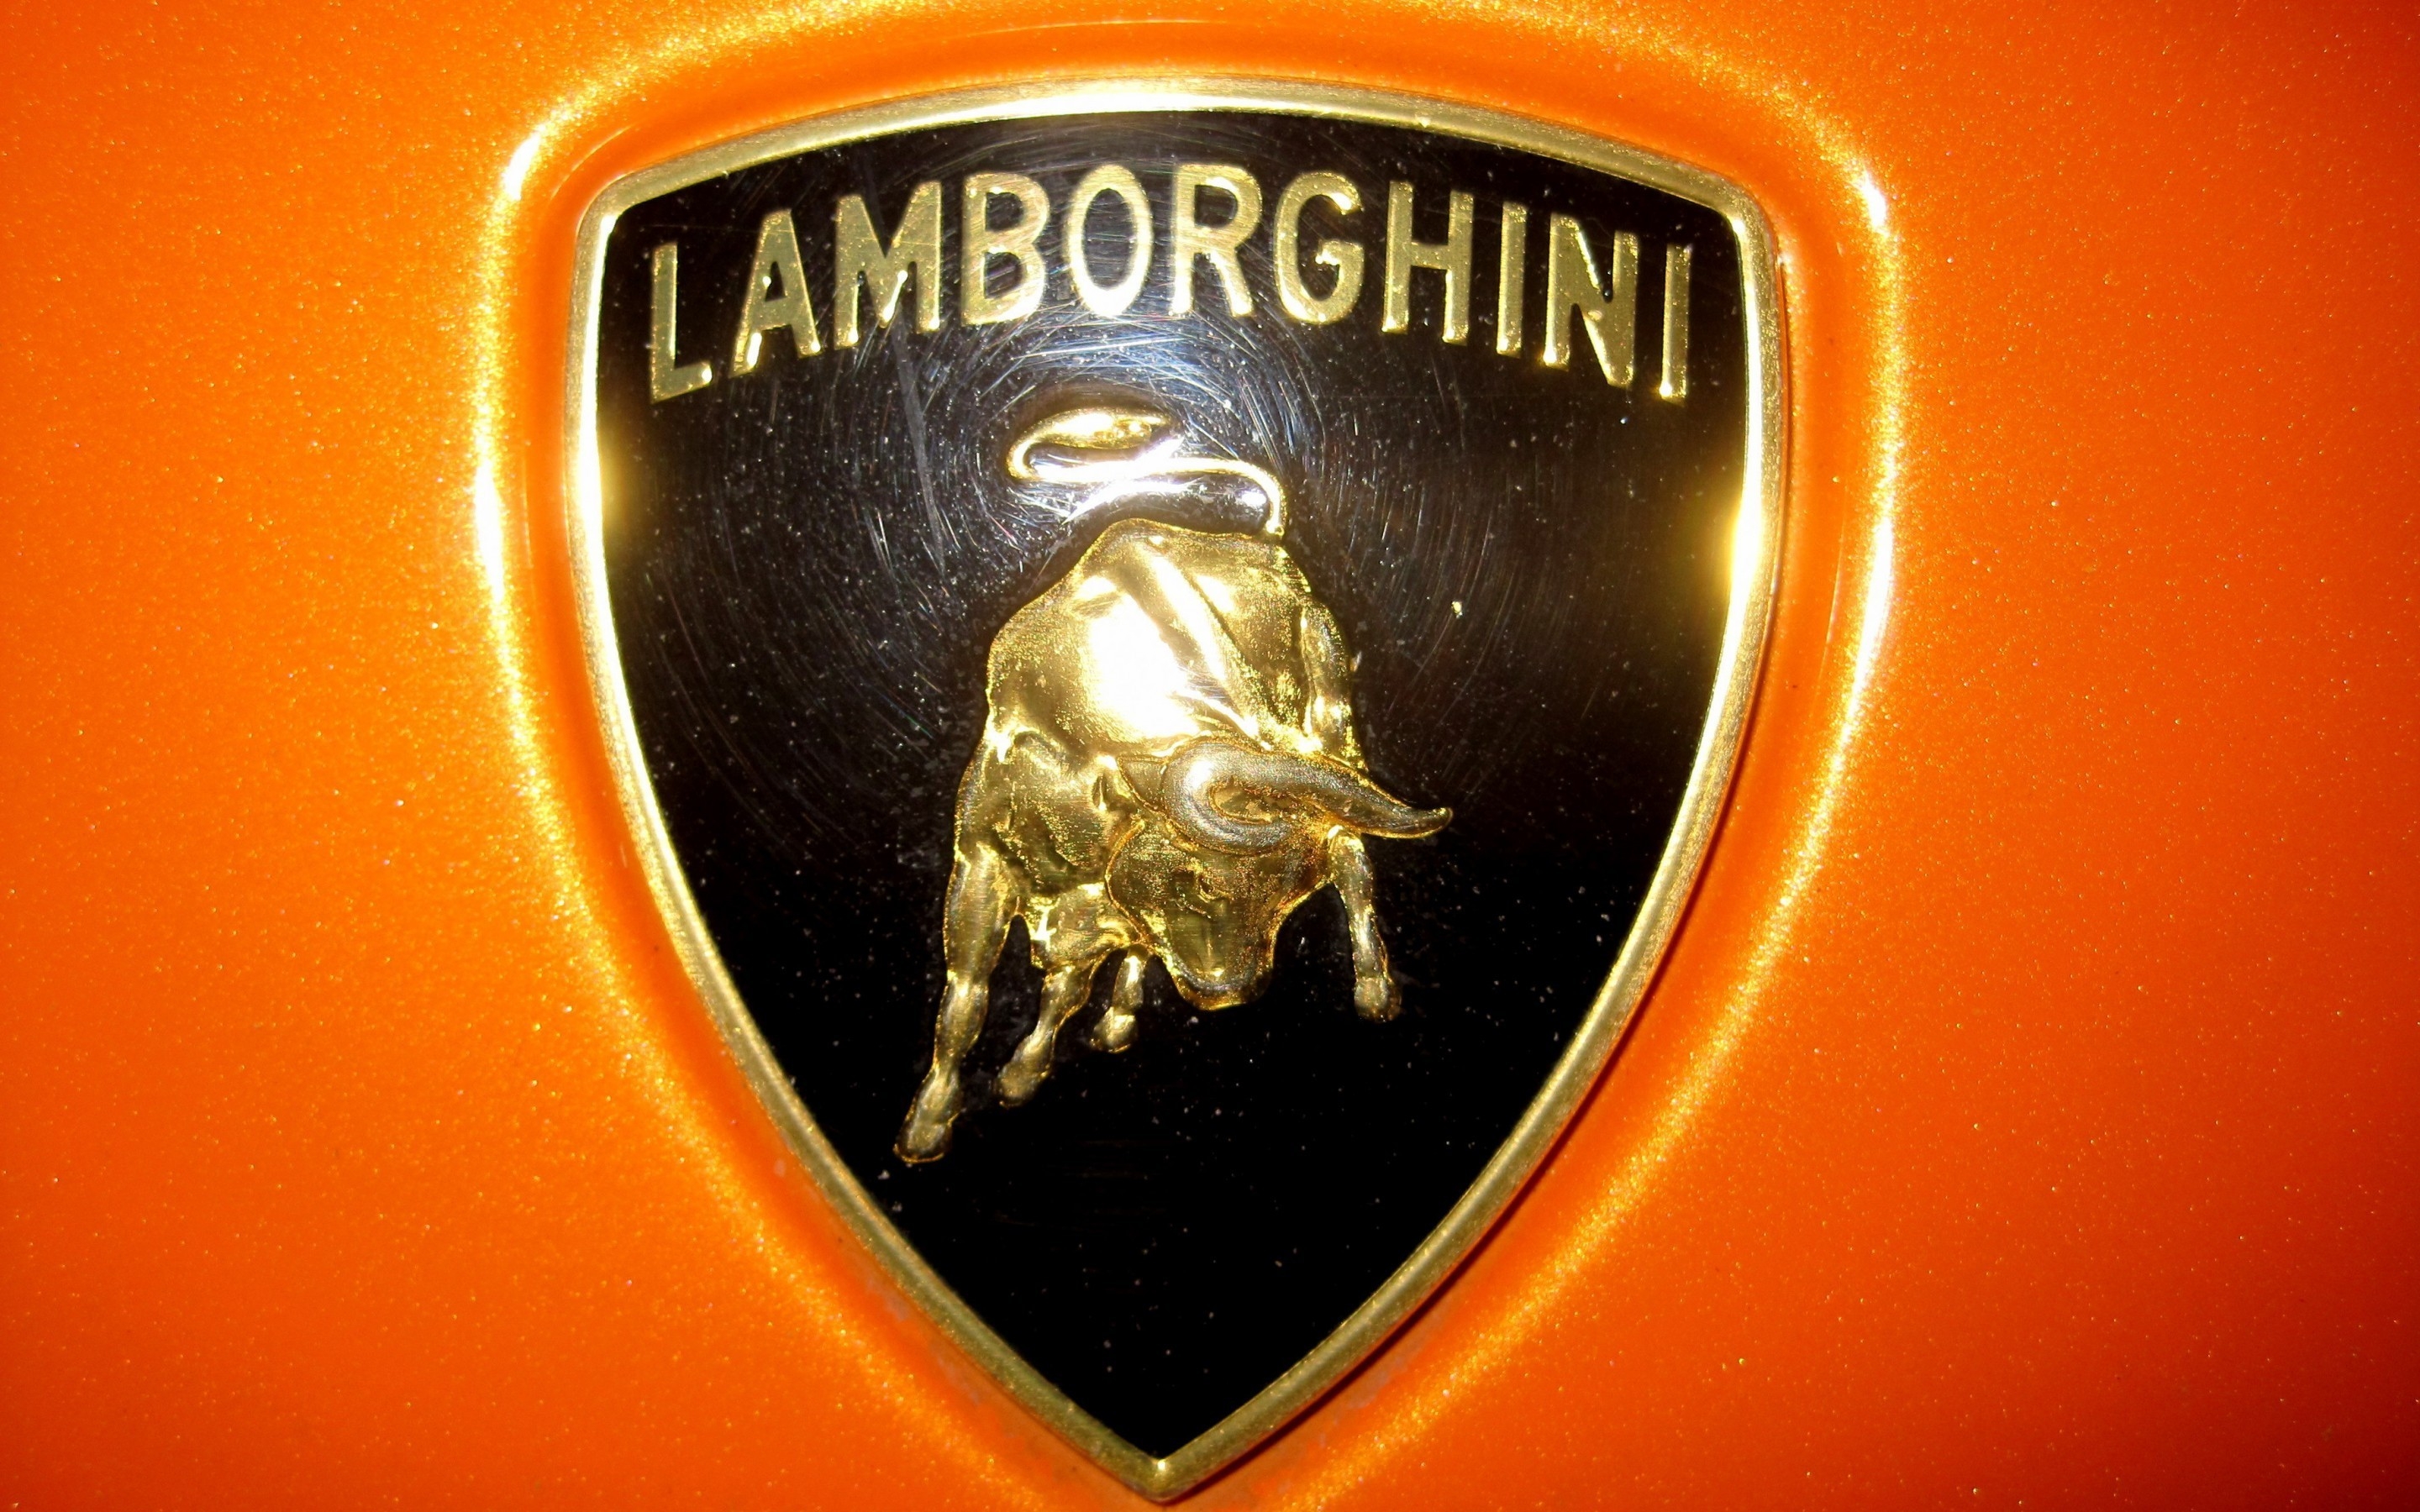 Lamborghini logo for 2880 x 1800 Retina Display resolution